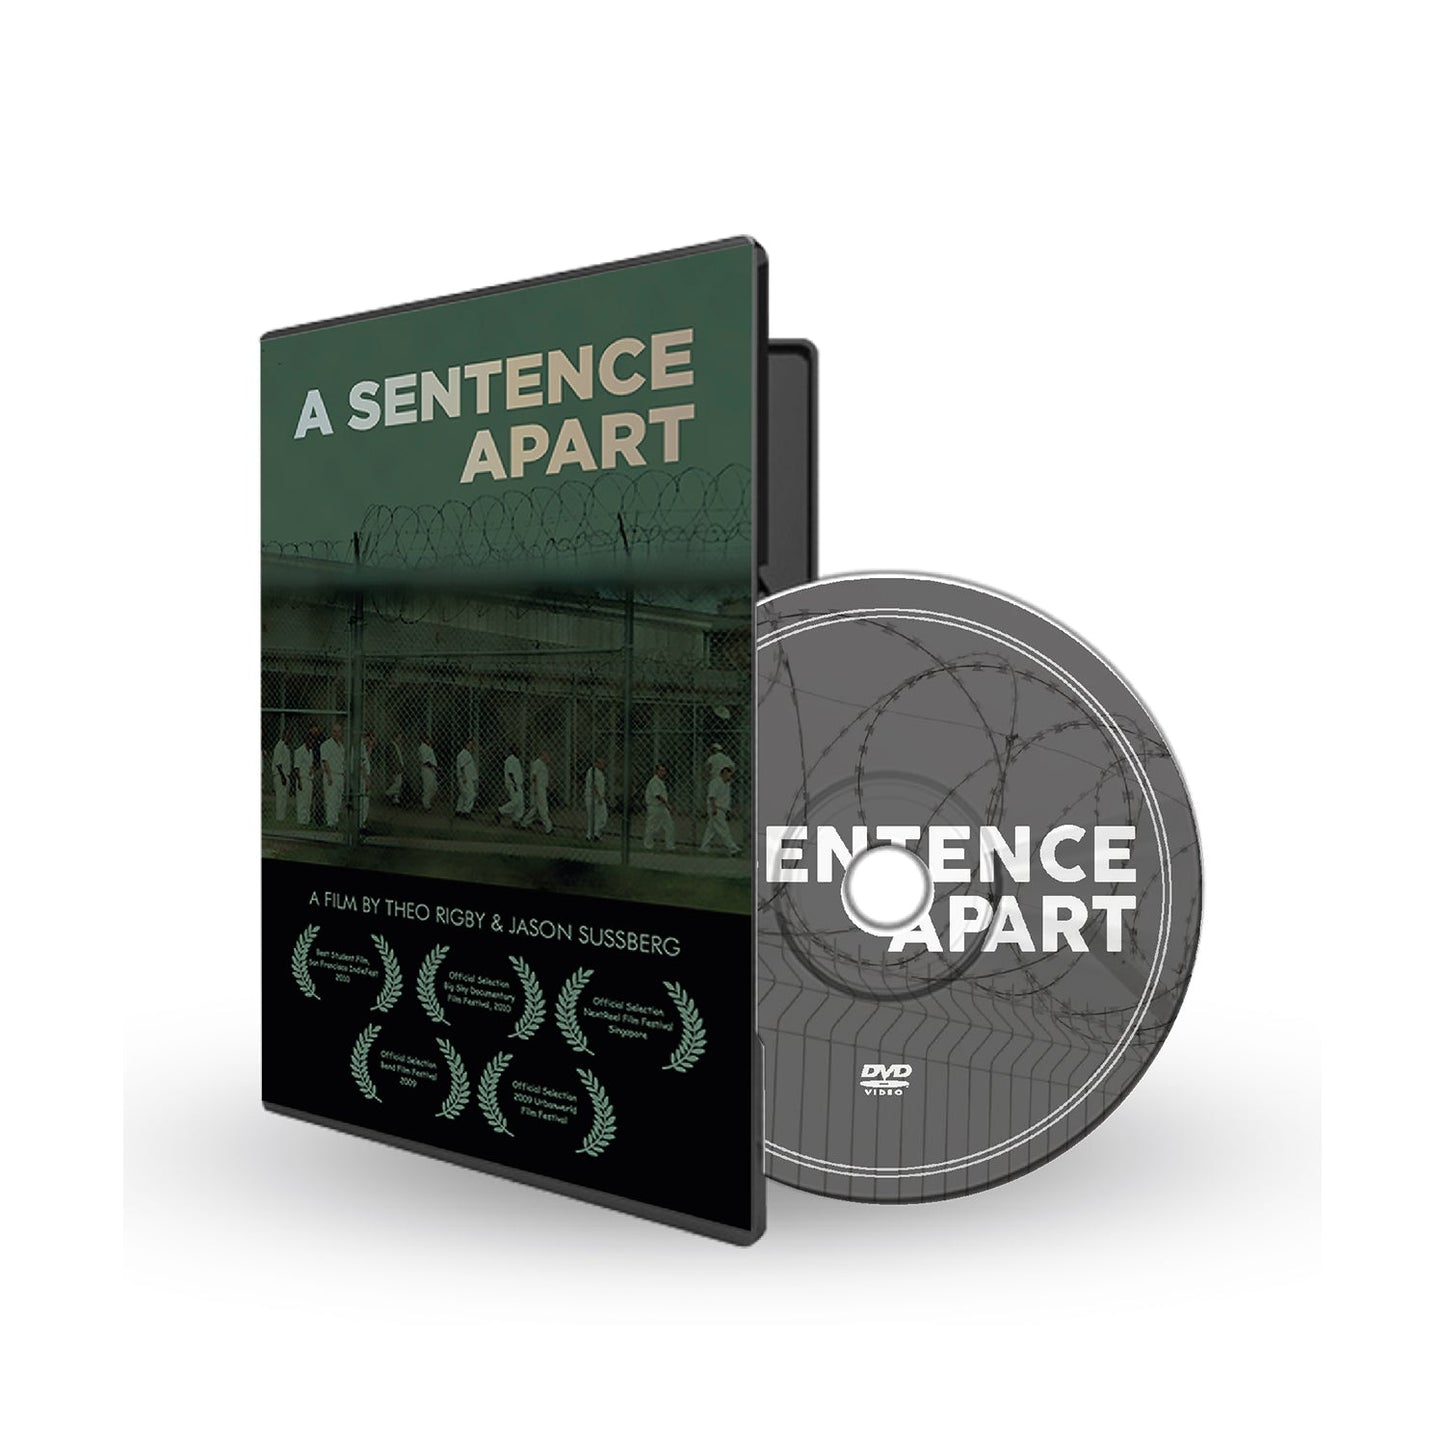 A SENTENCE APART - DVD